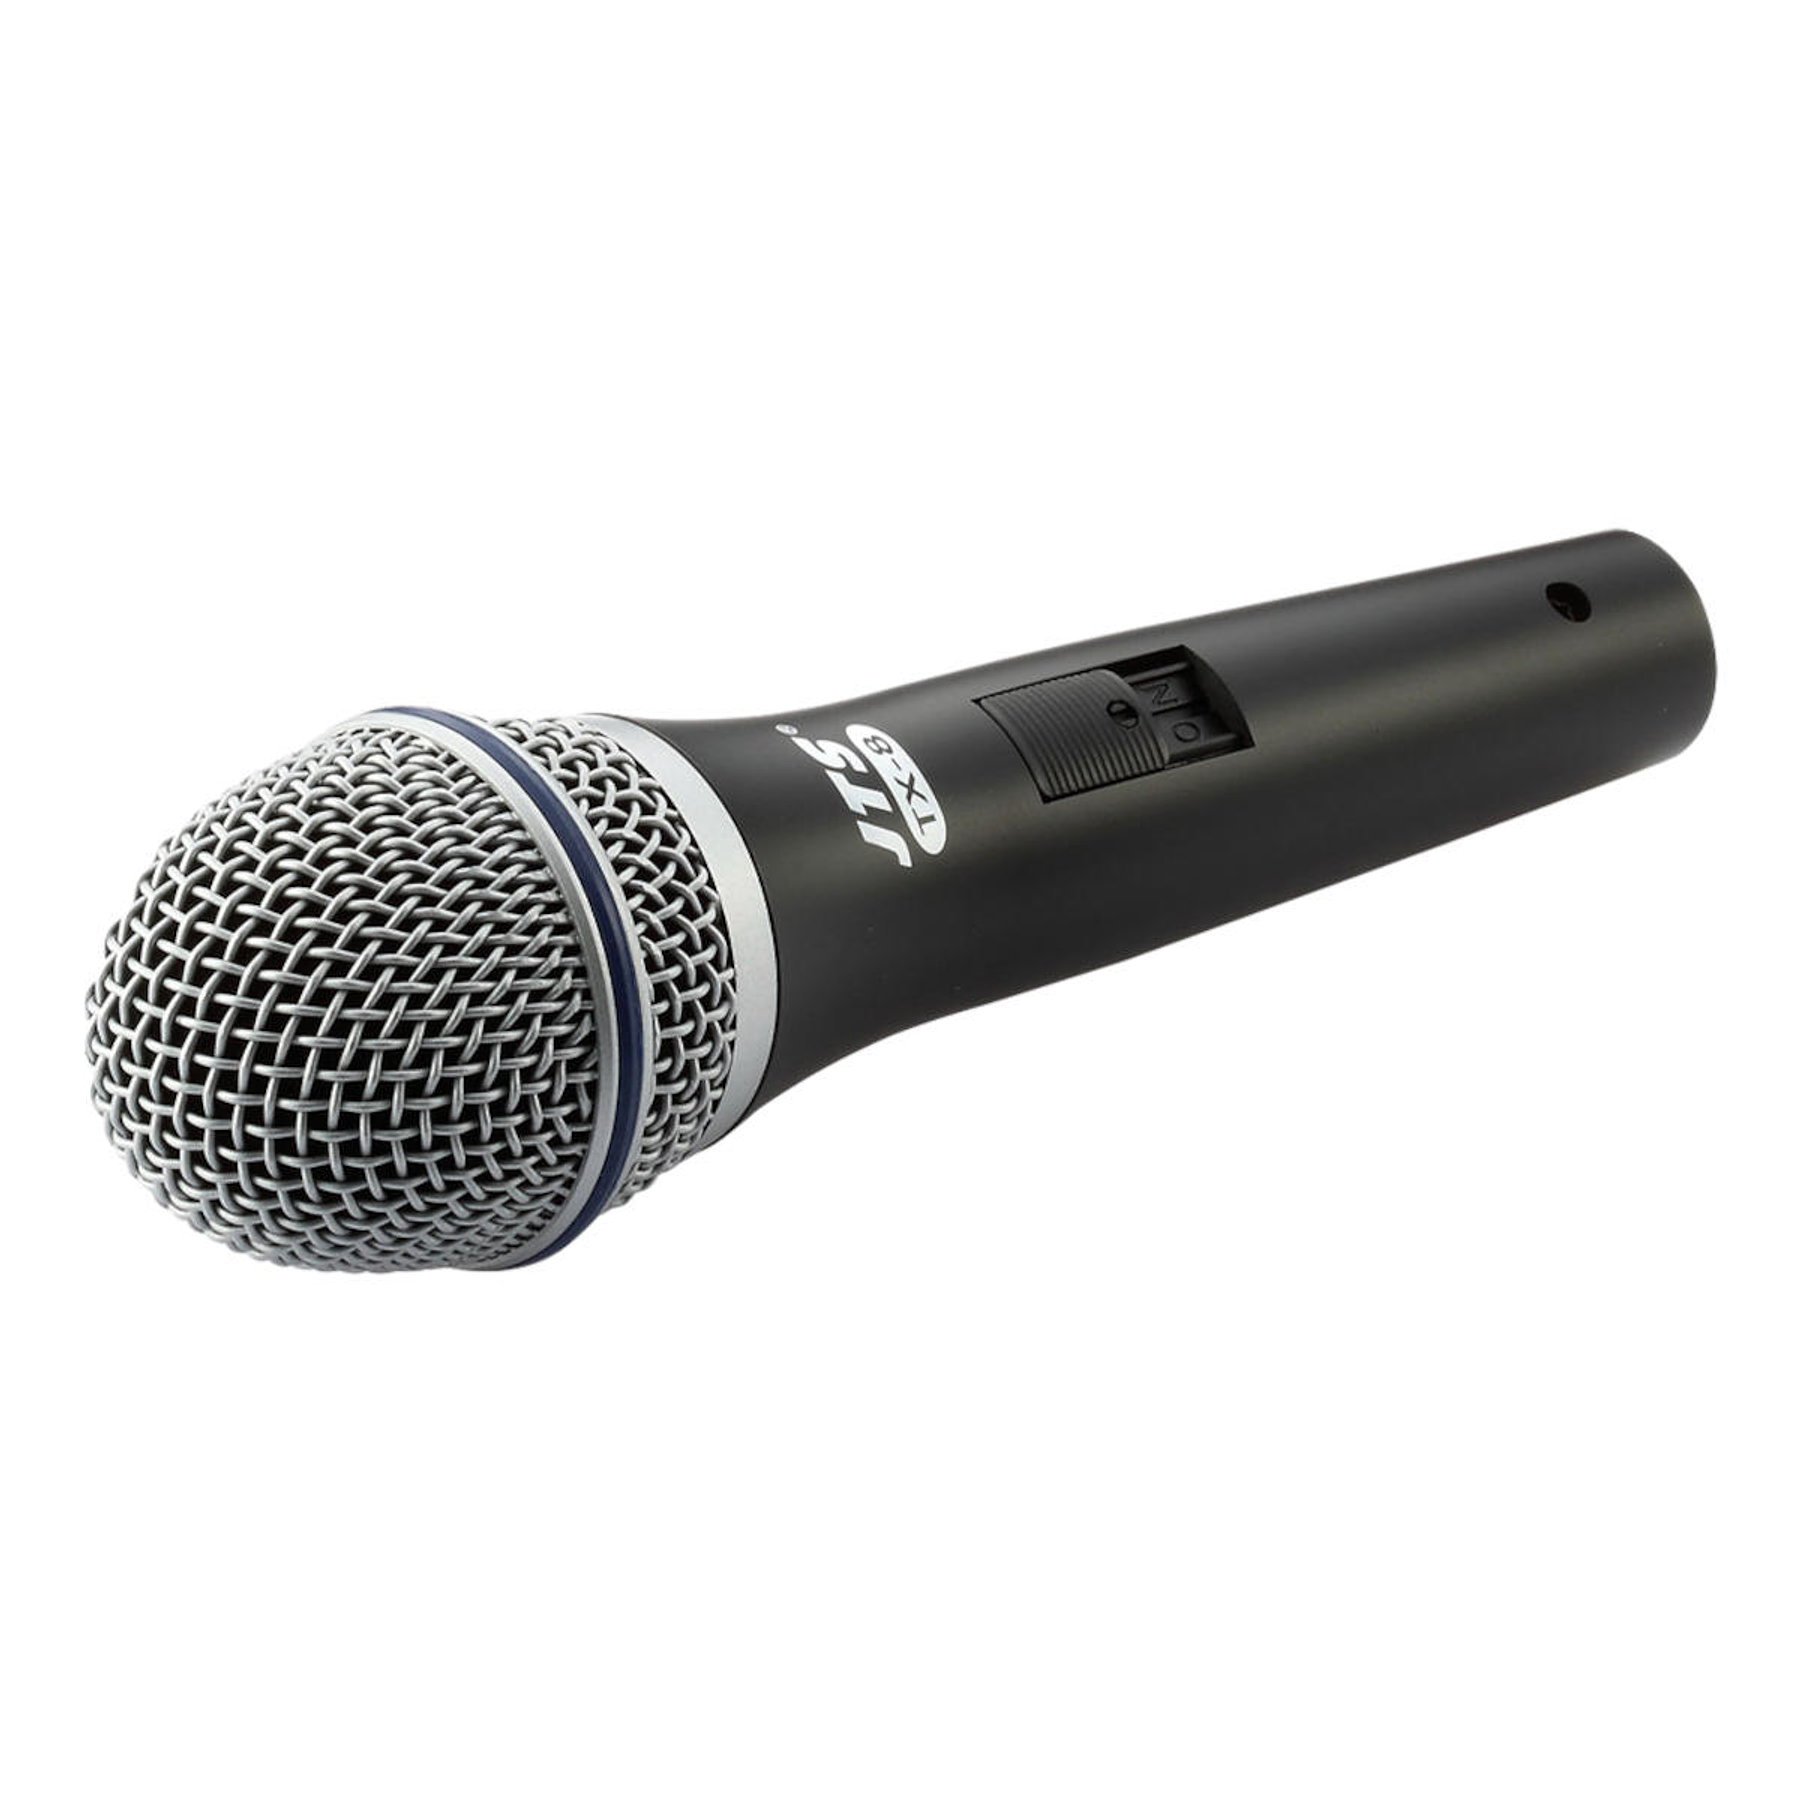 Microfono Vocal Dinamico JTS TX-8